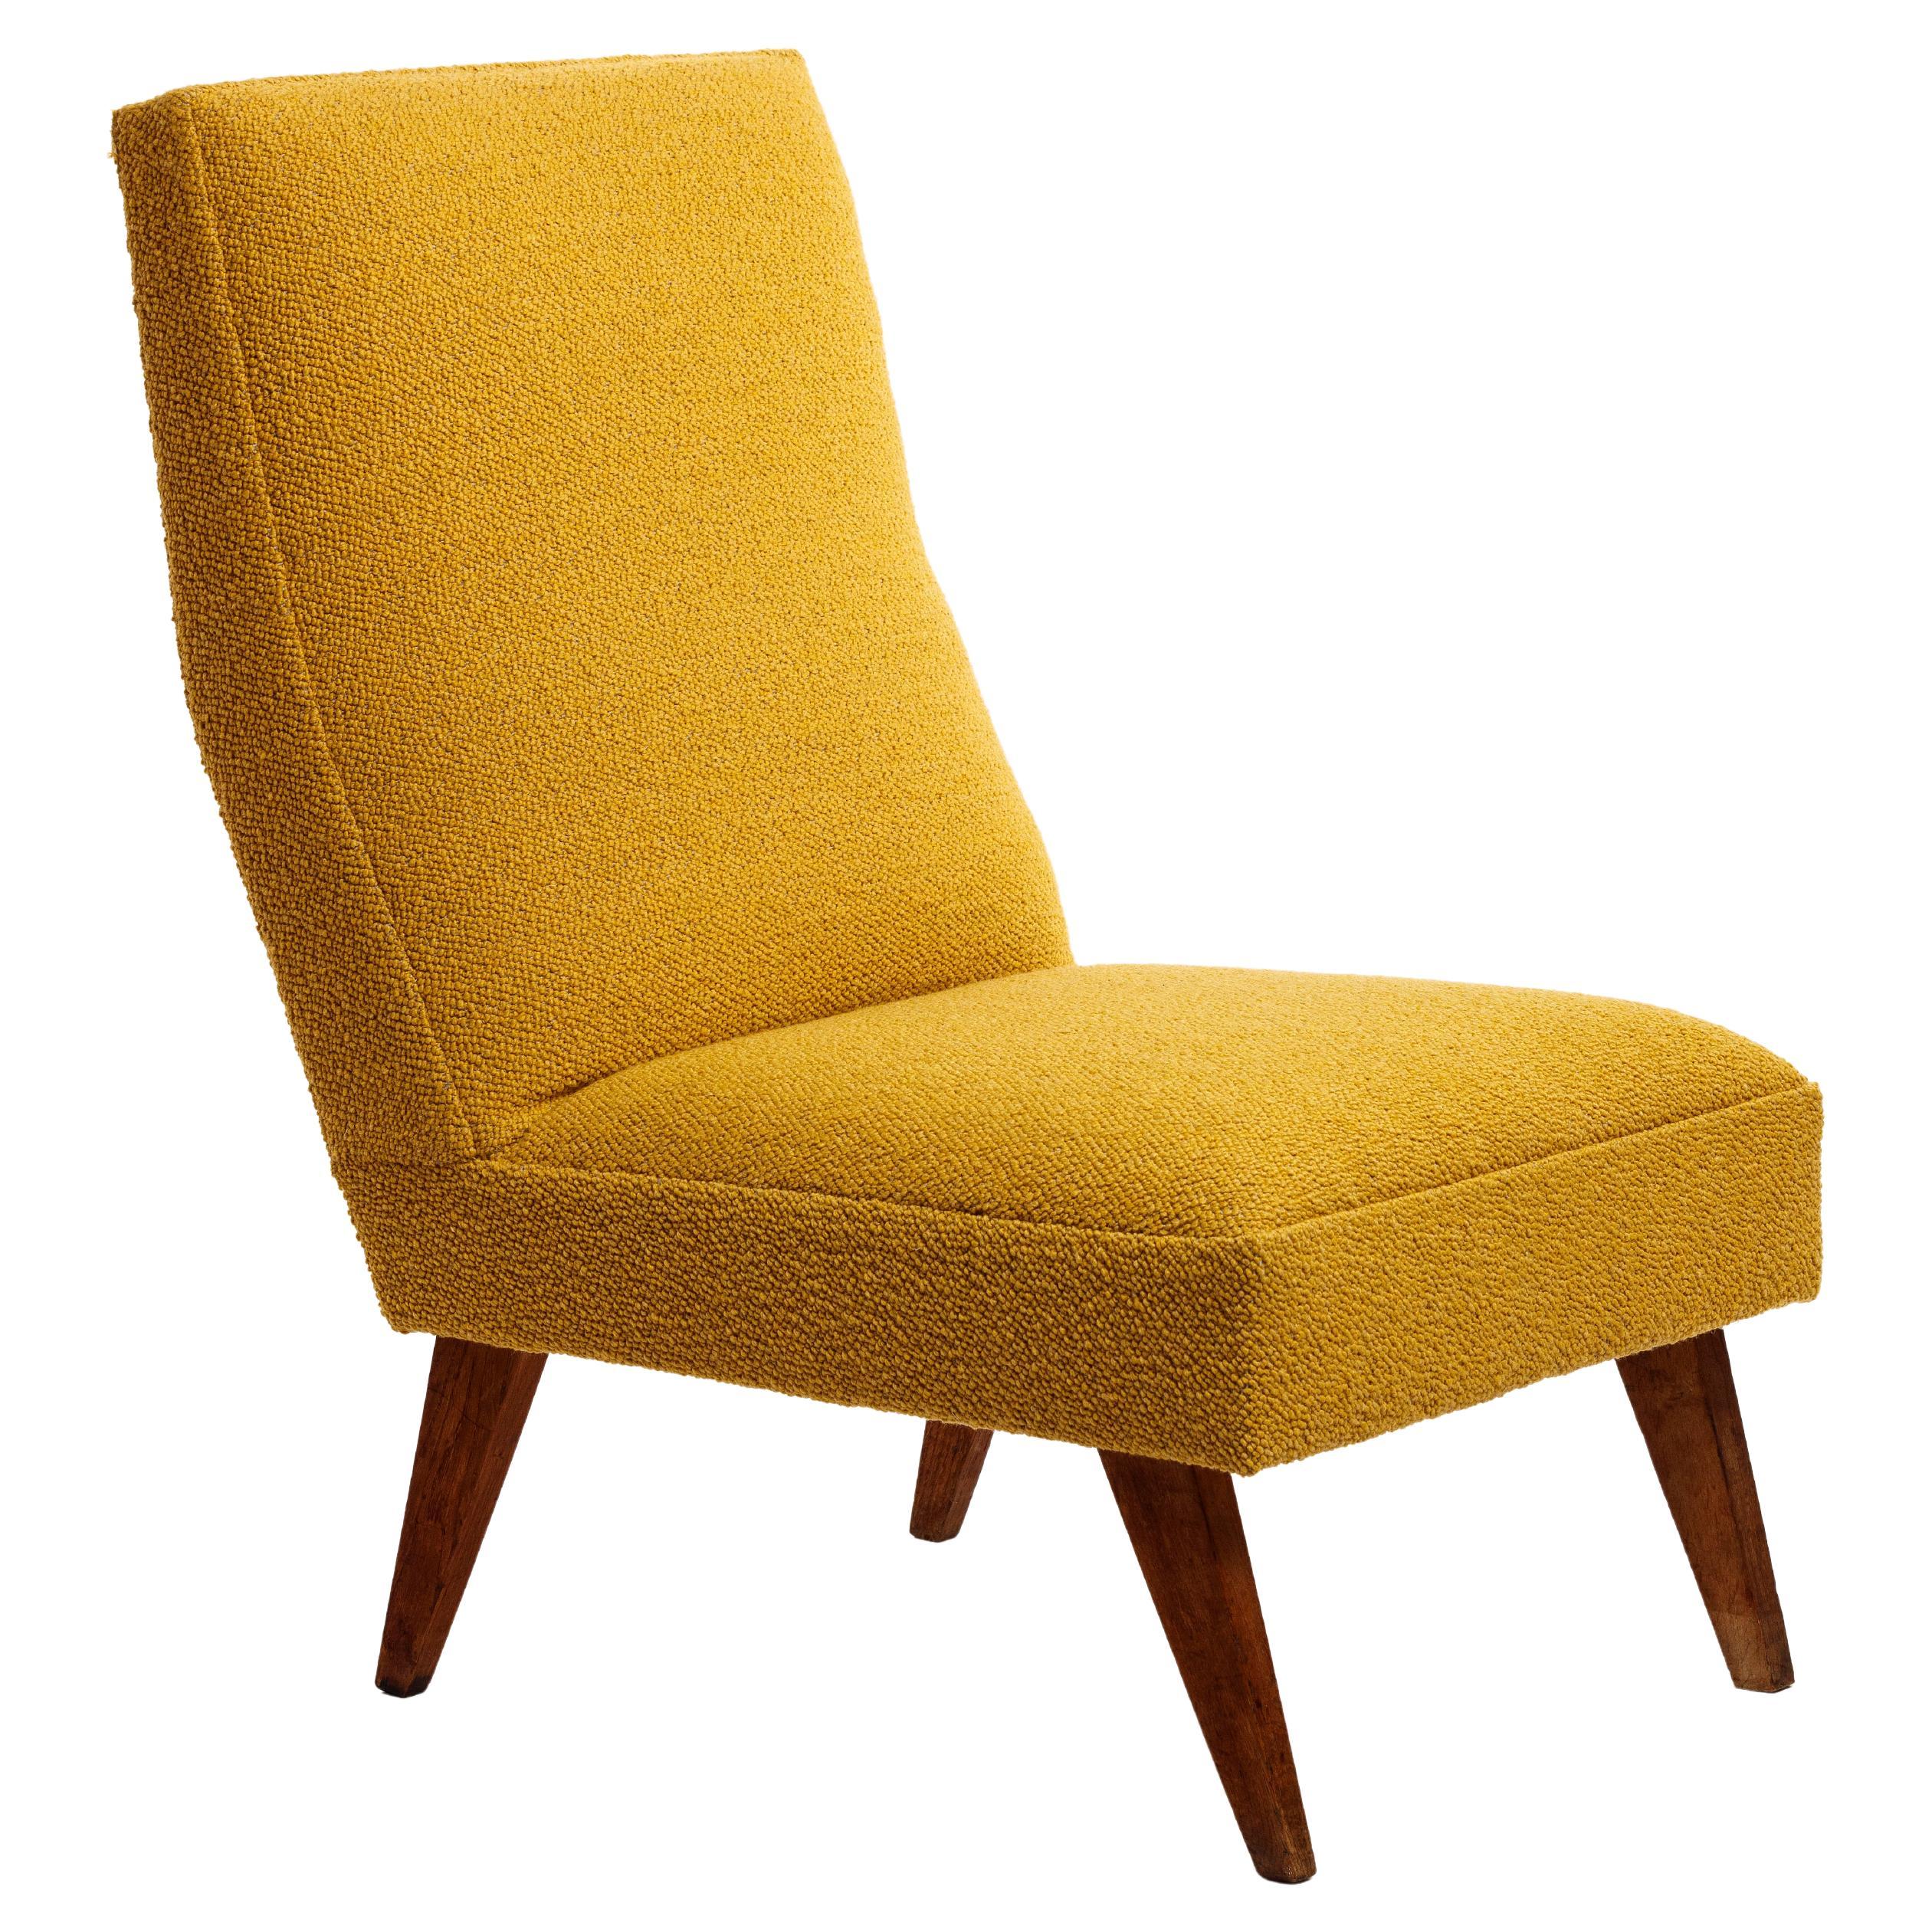 Emile Roset Yellow Lounge Chair Roset Editeur 1955 Antony university residence